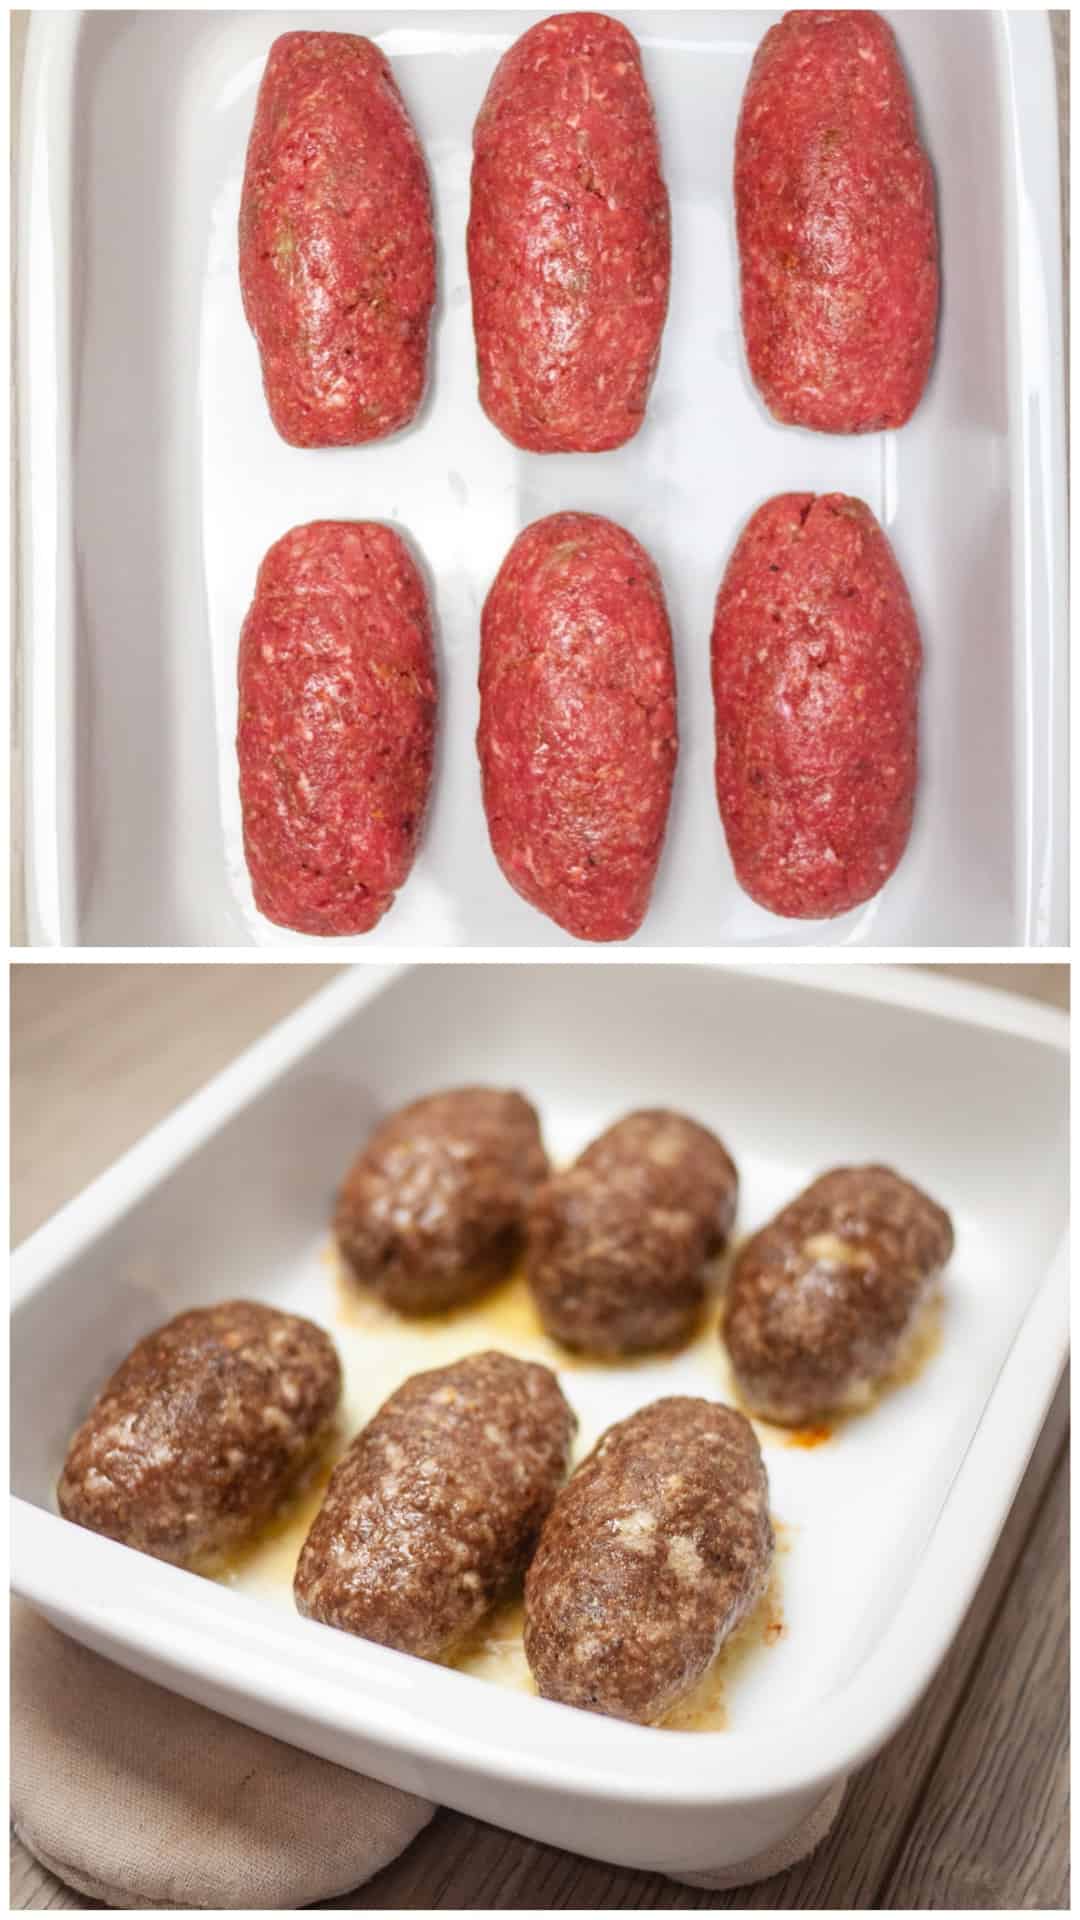 Traditional Soutzoukakia recipe (Greek baked Meatballs in tomato sauce) - preparing the meatballs